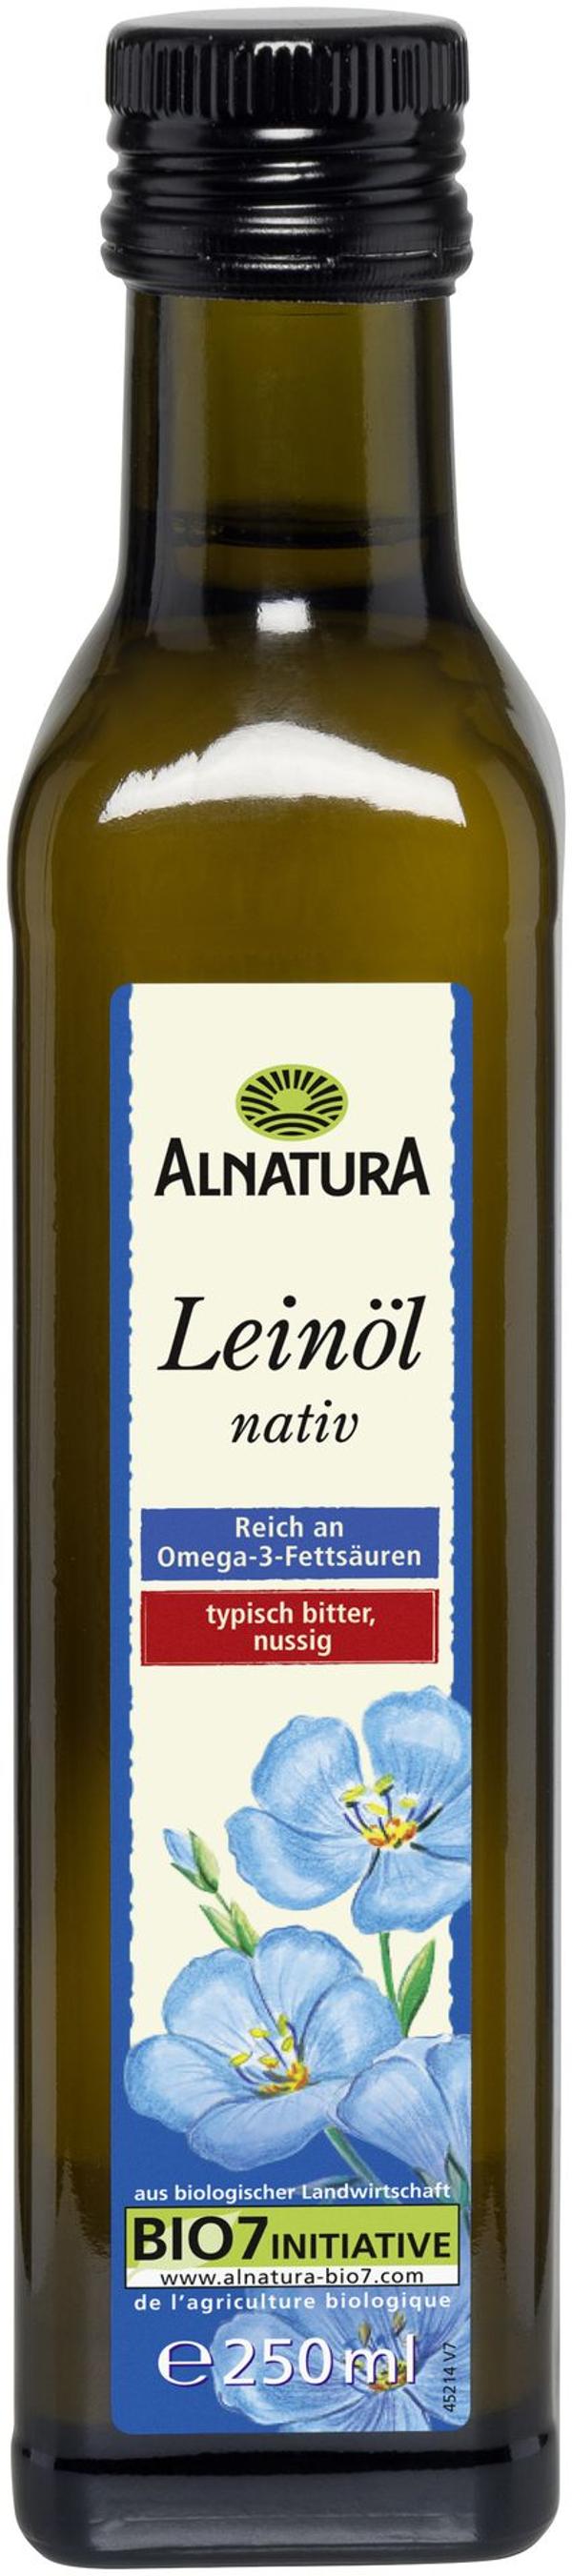 Produktfoto zu Leinöl 250 ml Alnatura